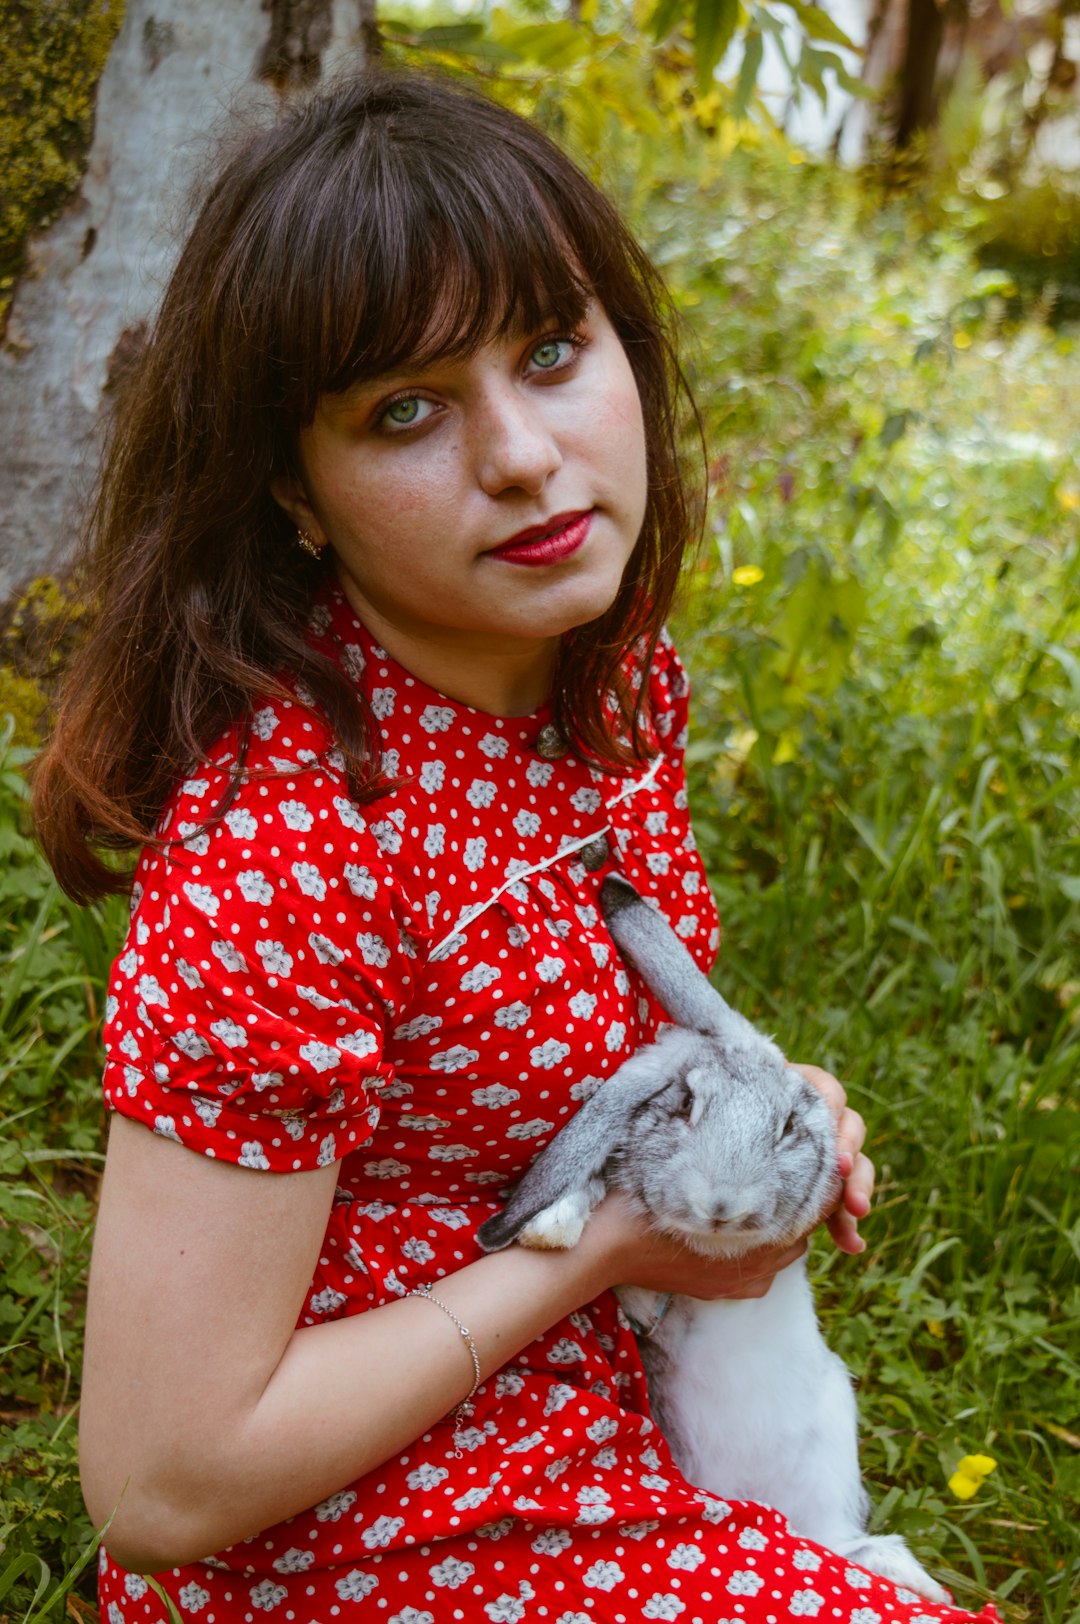 girl in red and white polka dot shirt holding gray rabbit